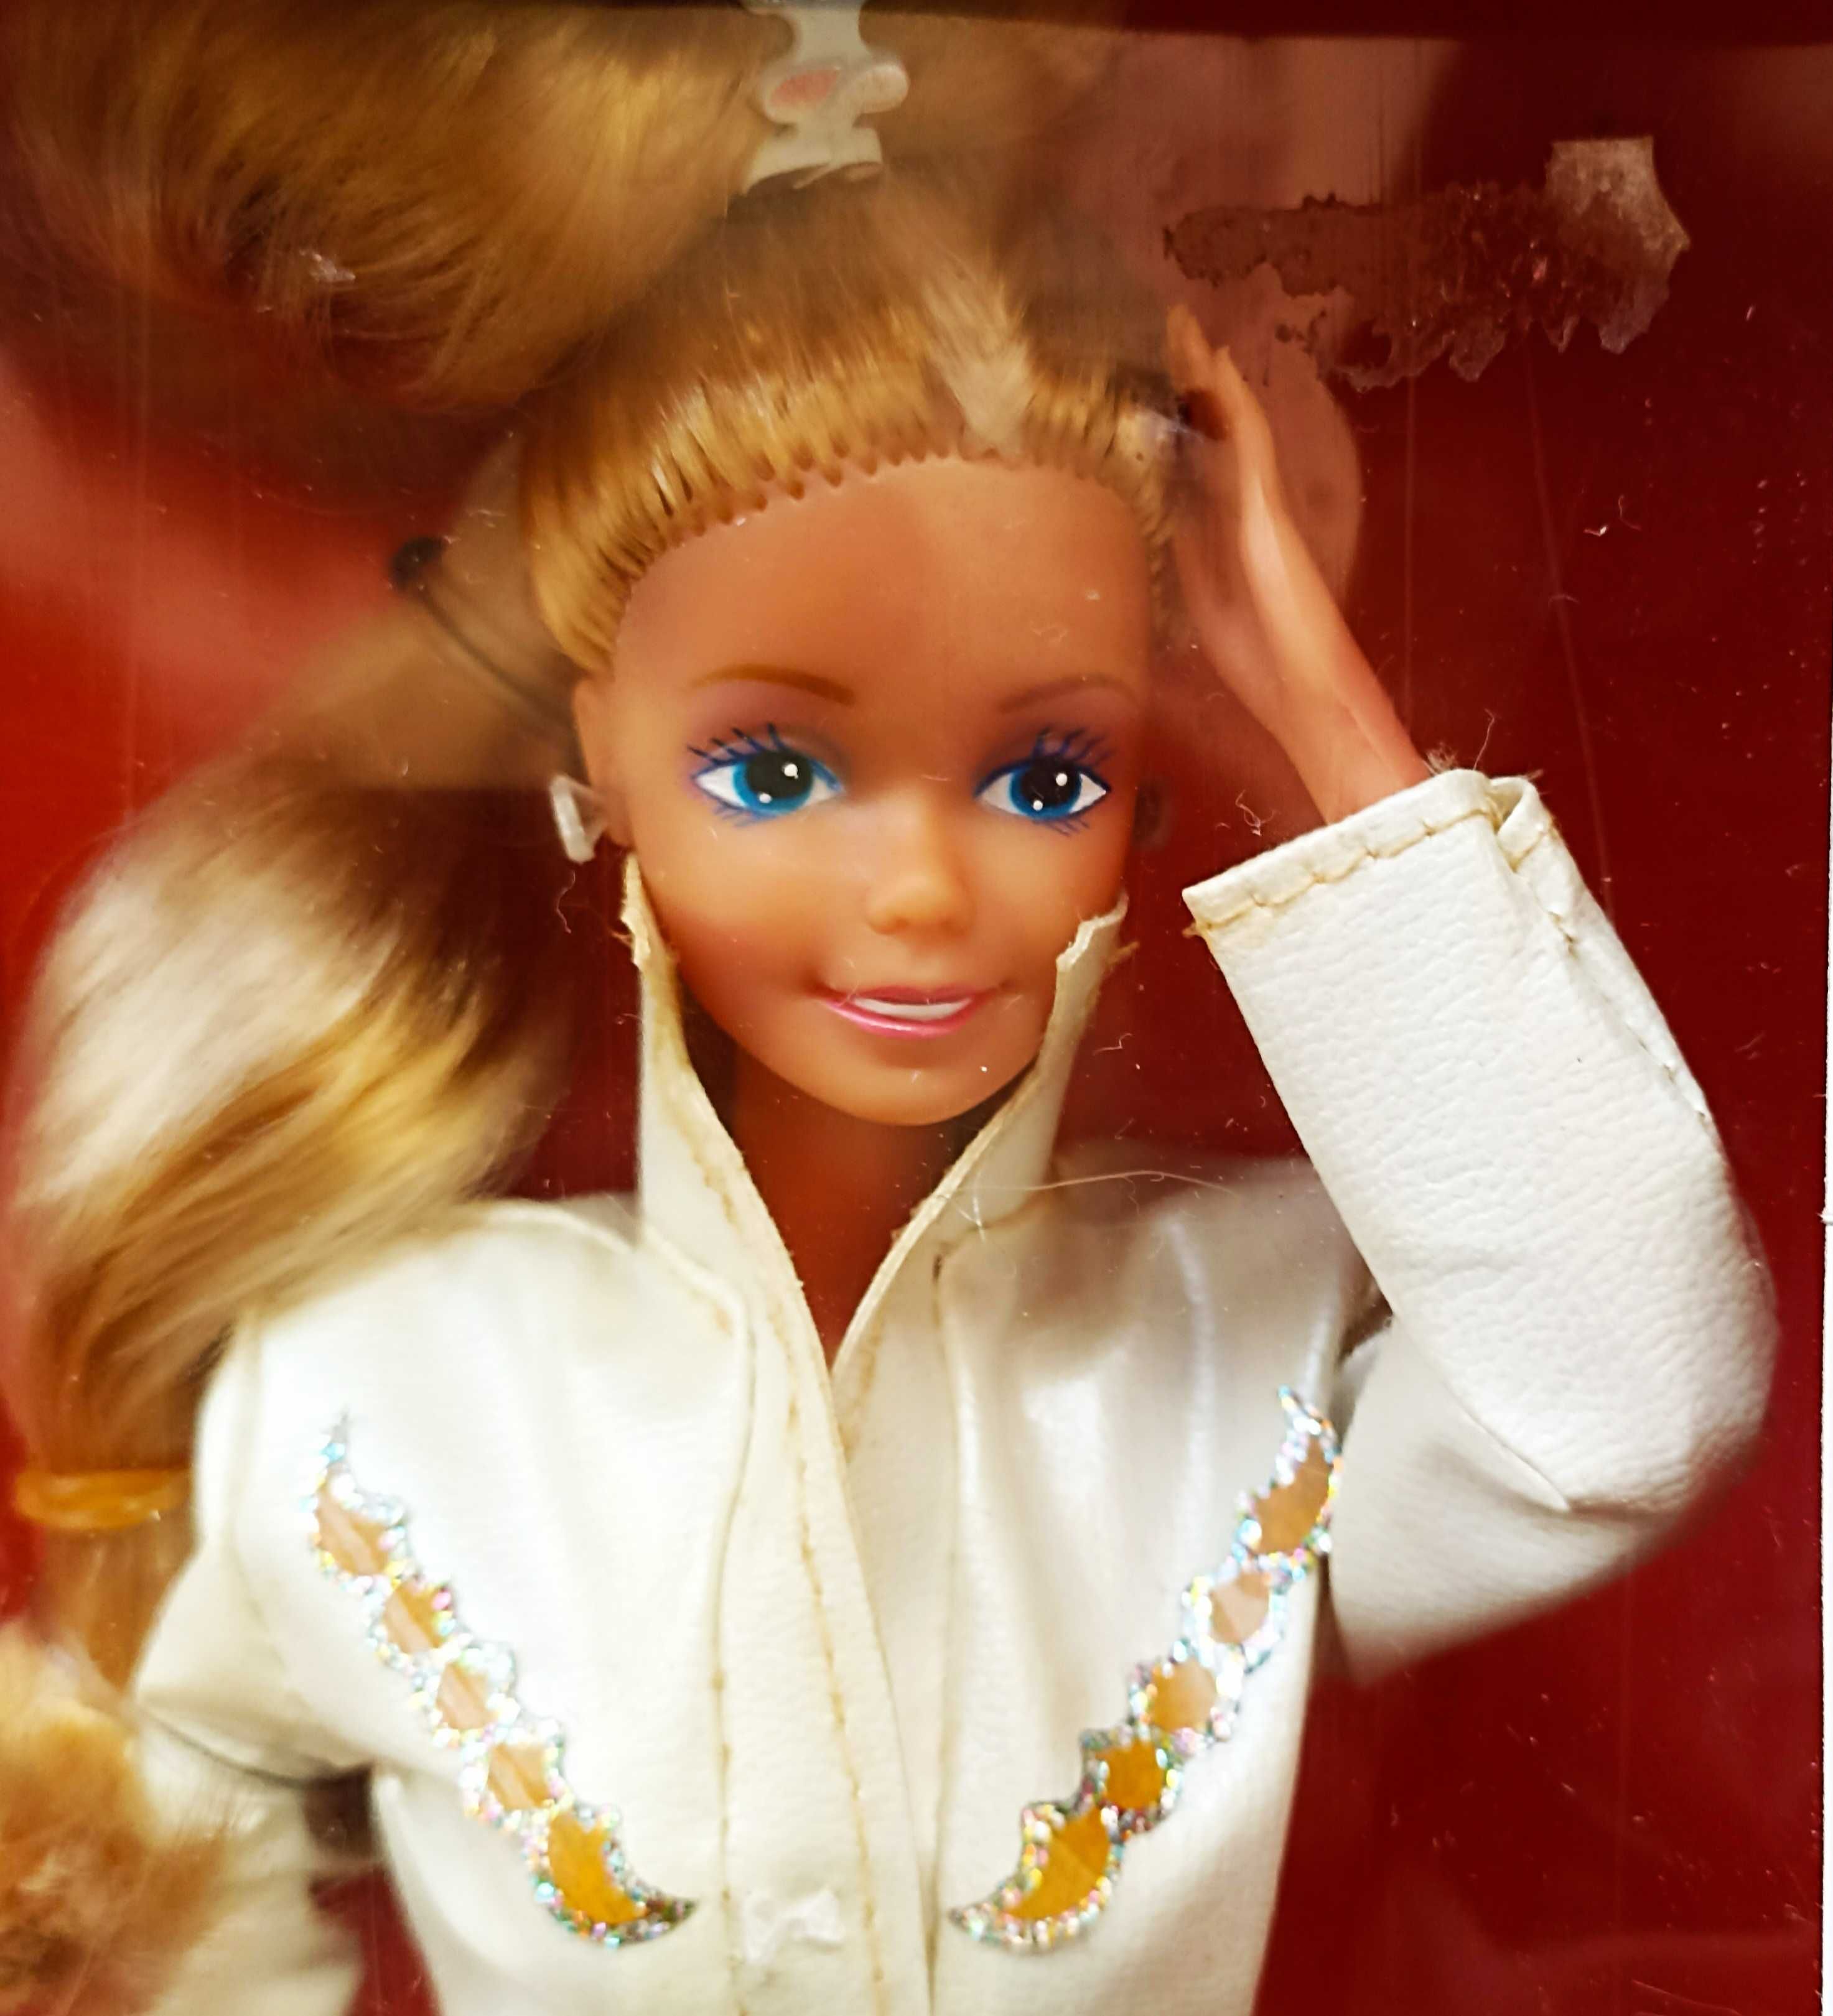 Barbie Ultra Hair Mil Peinados 1986 Congost